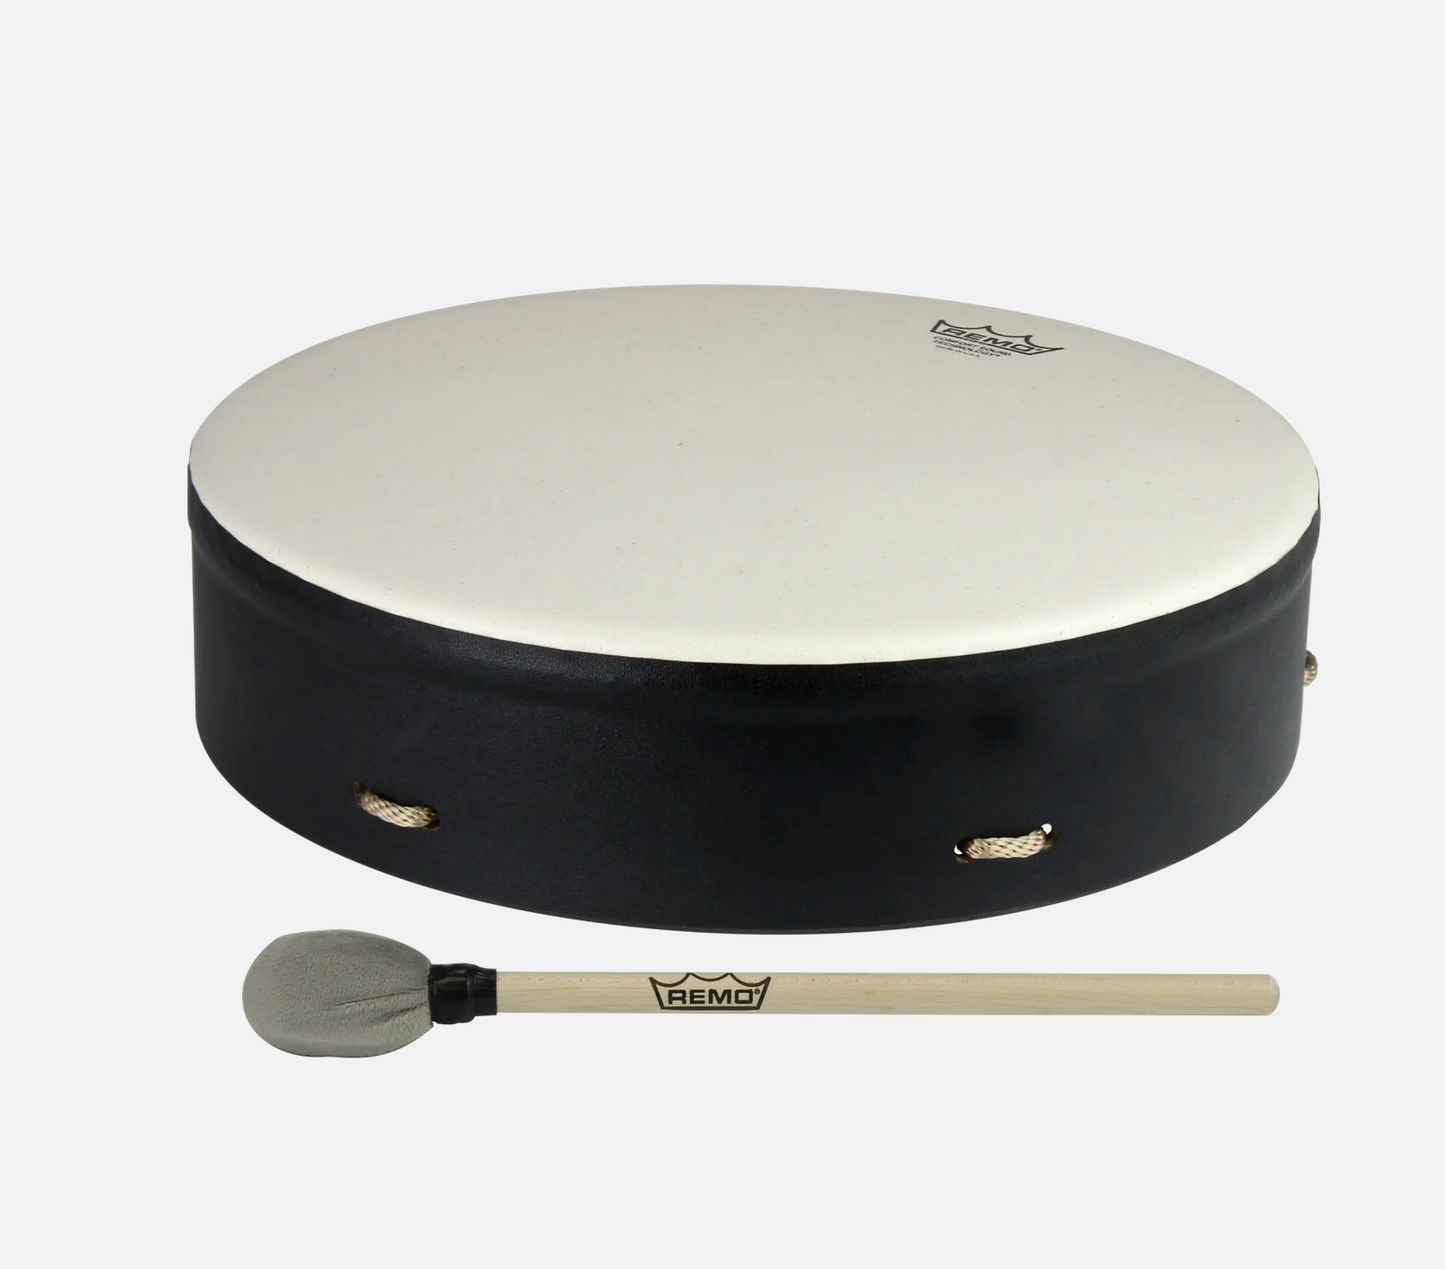 Remo Comfort Sound Technology Hand Drum